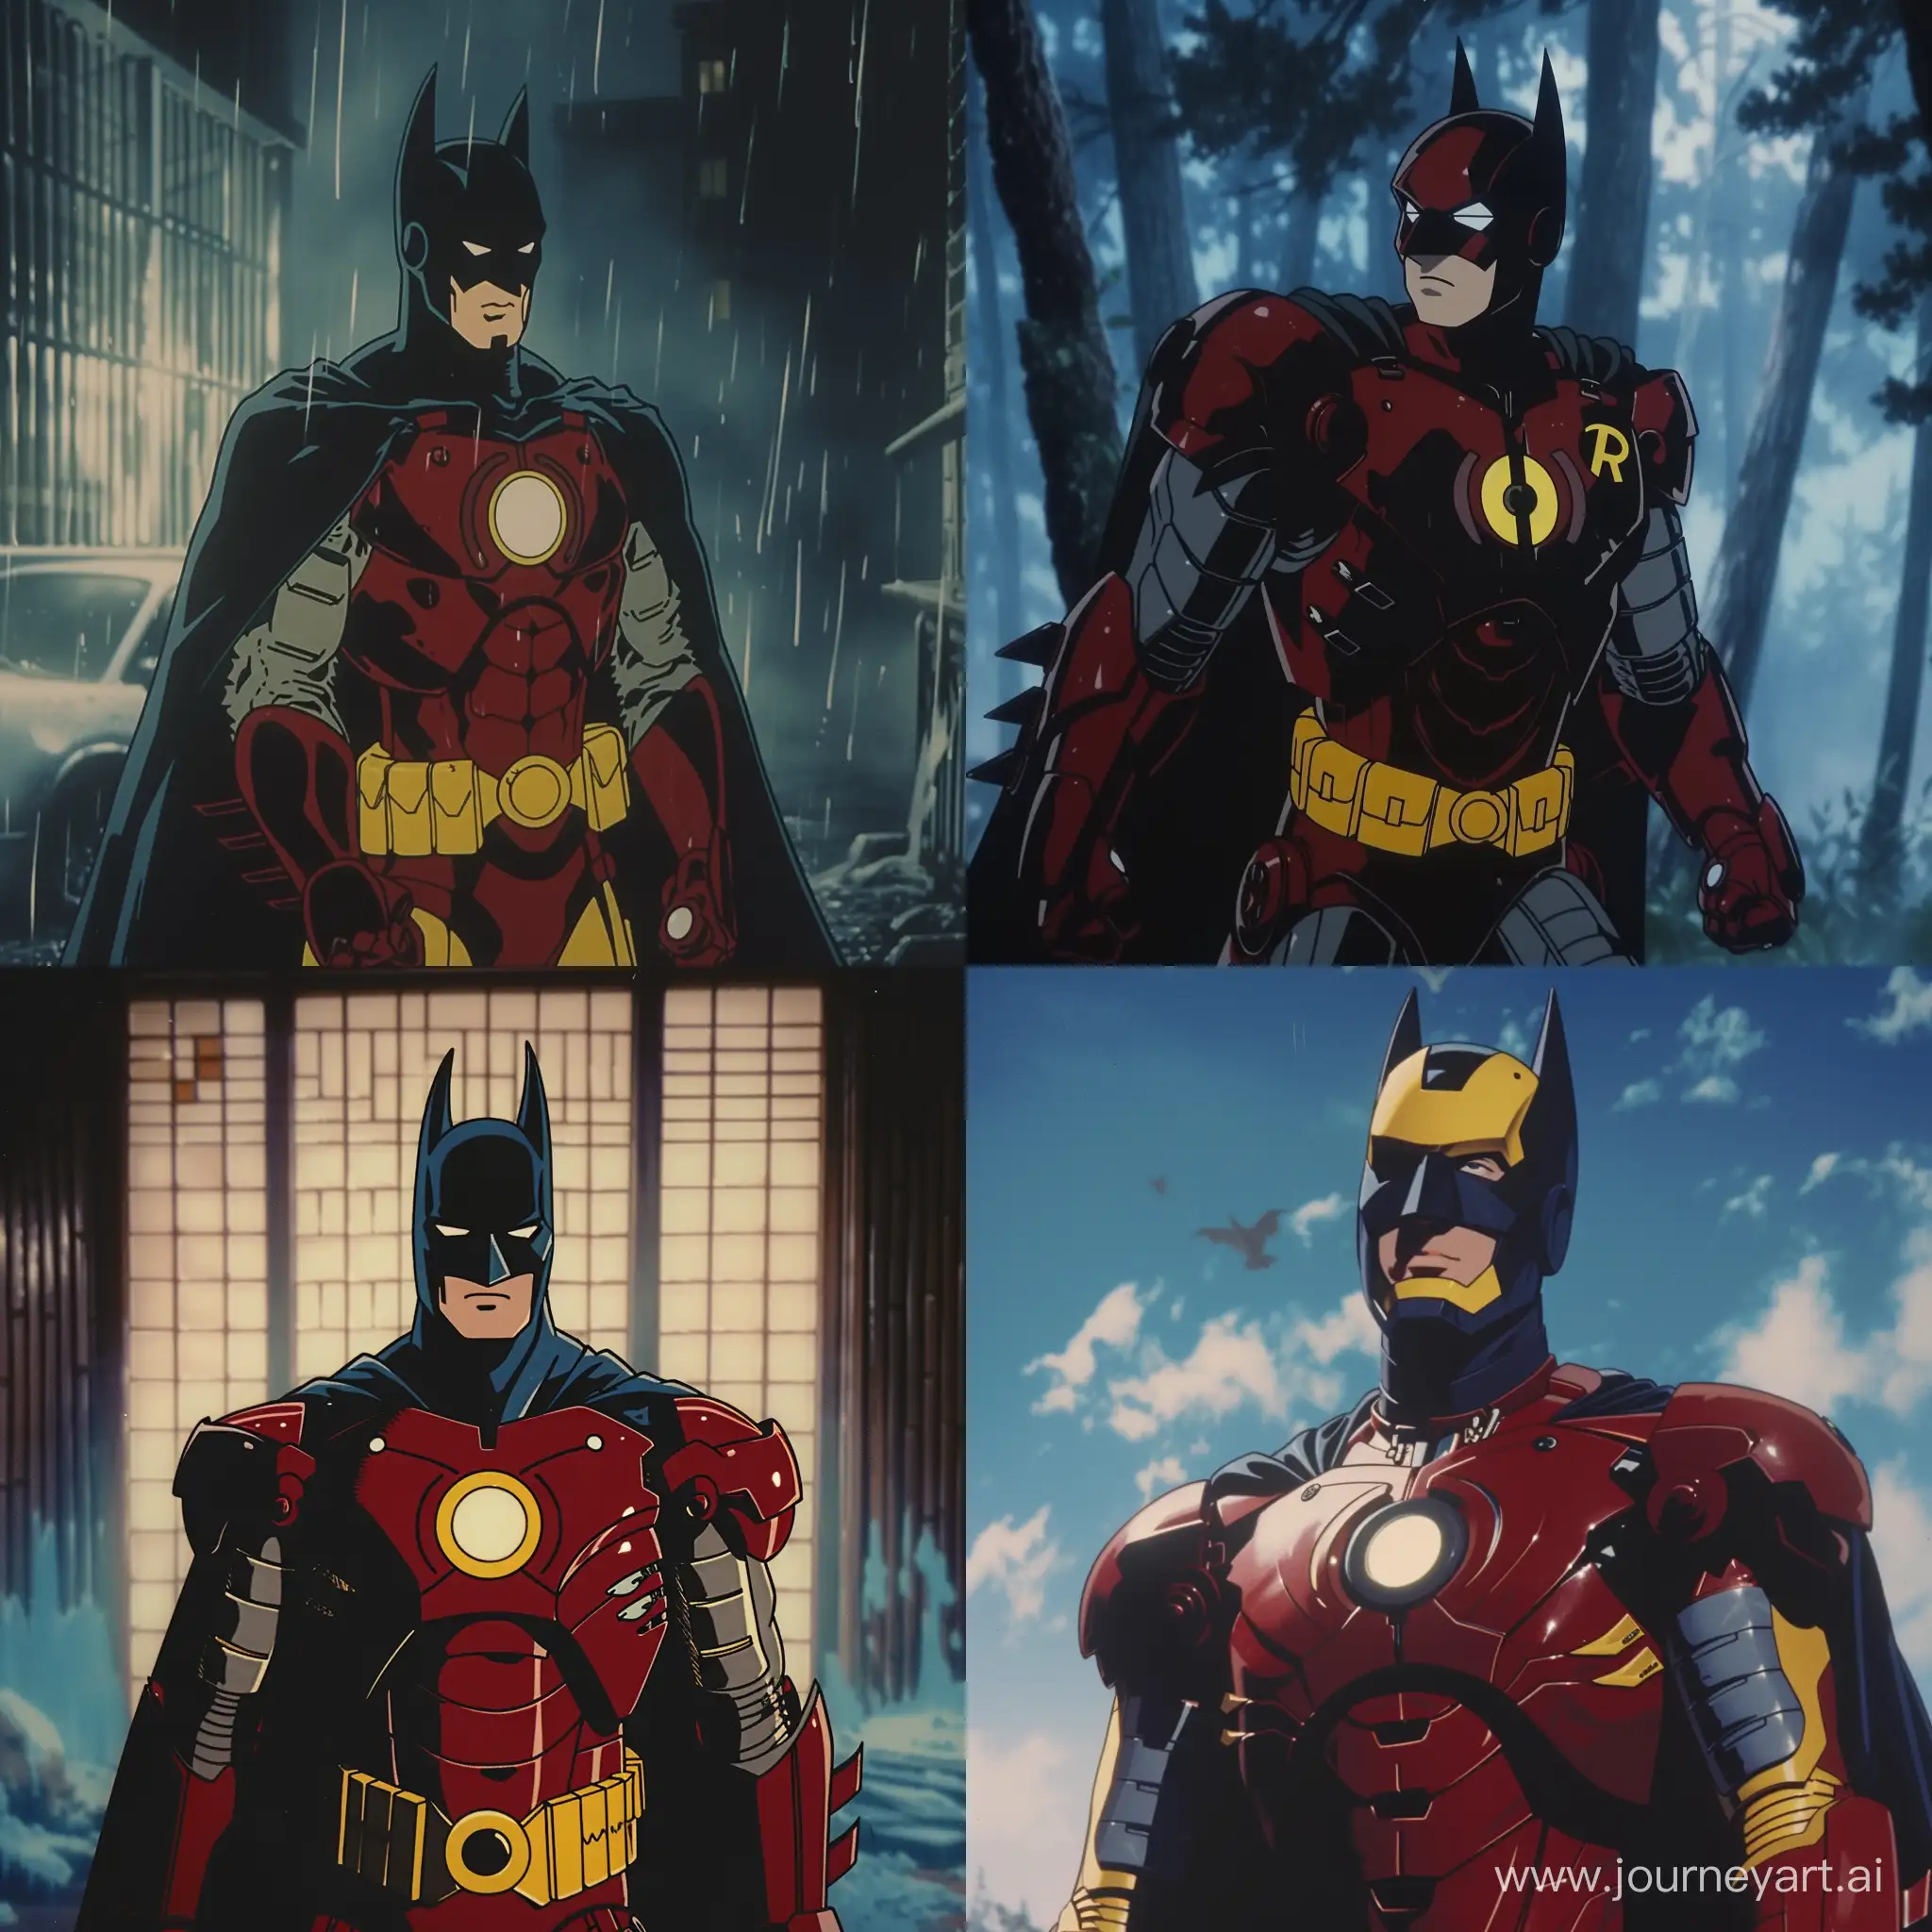 screenshot from 1980s anime film, batman wearing a ironman costume, aesthetic film